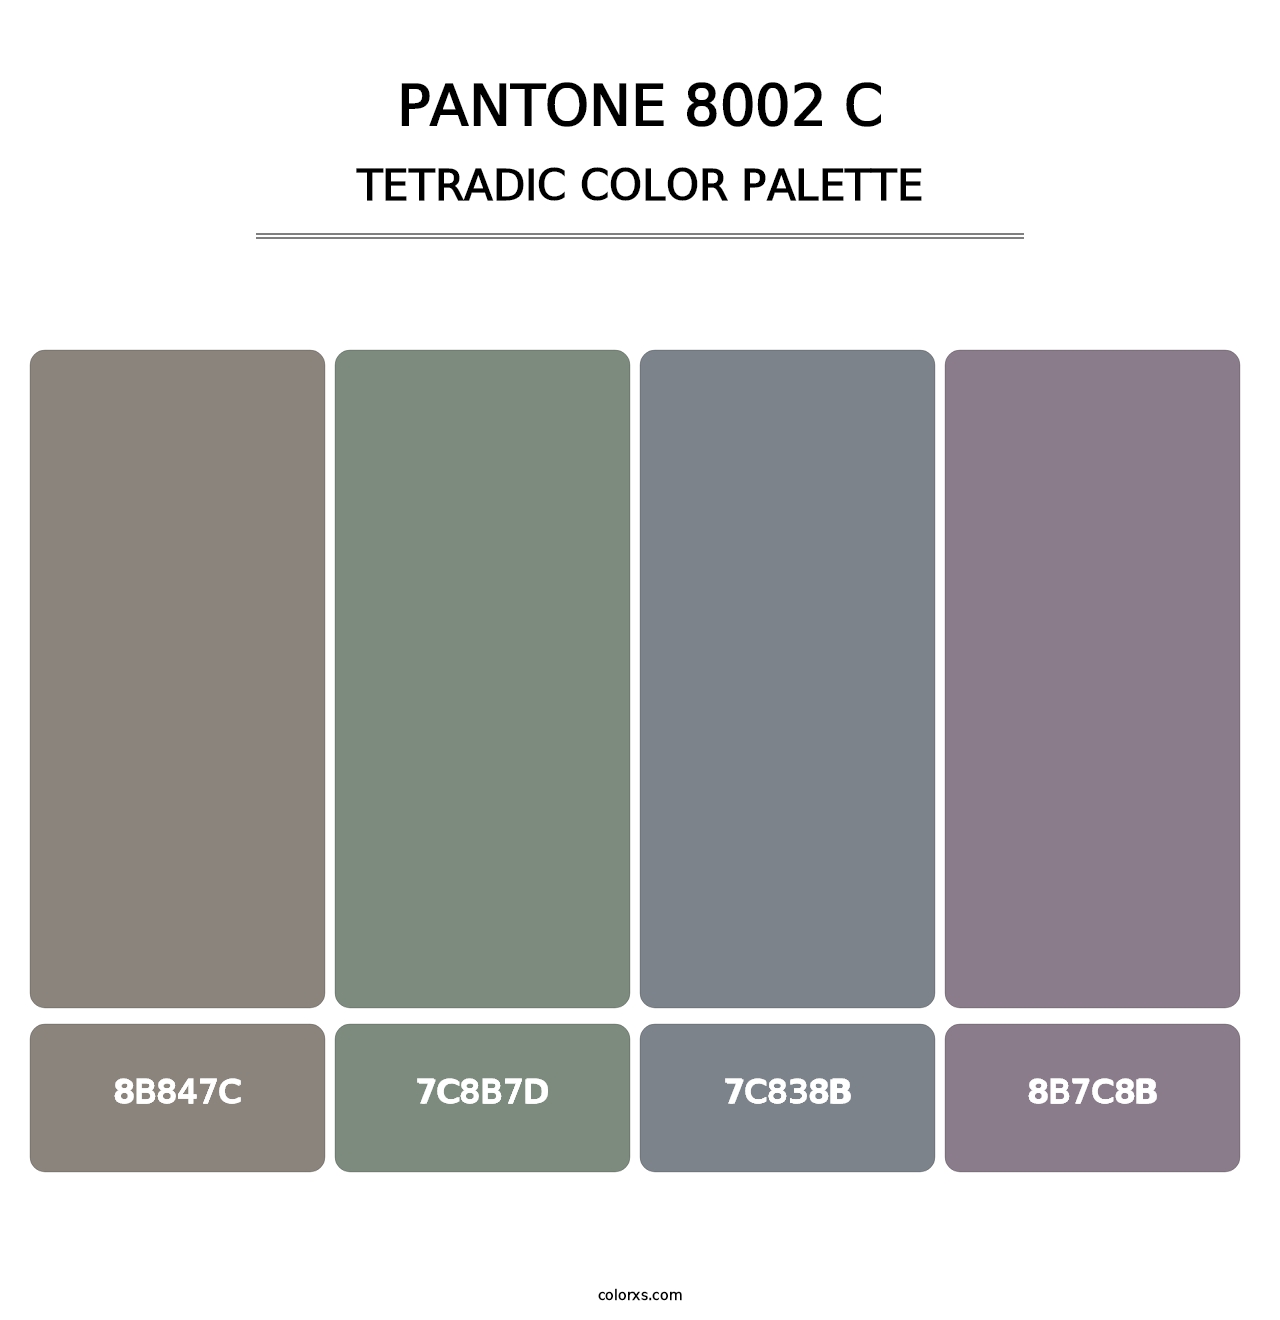 PANTONE 8002 C - Tetradic Color Palette